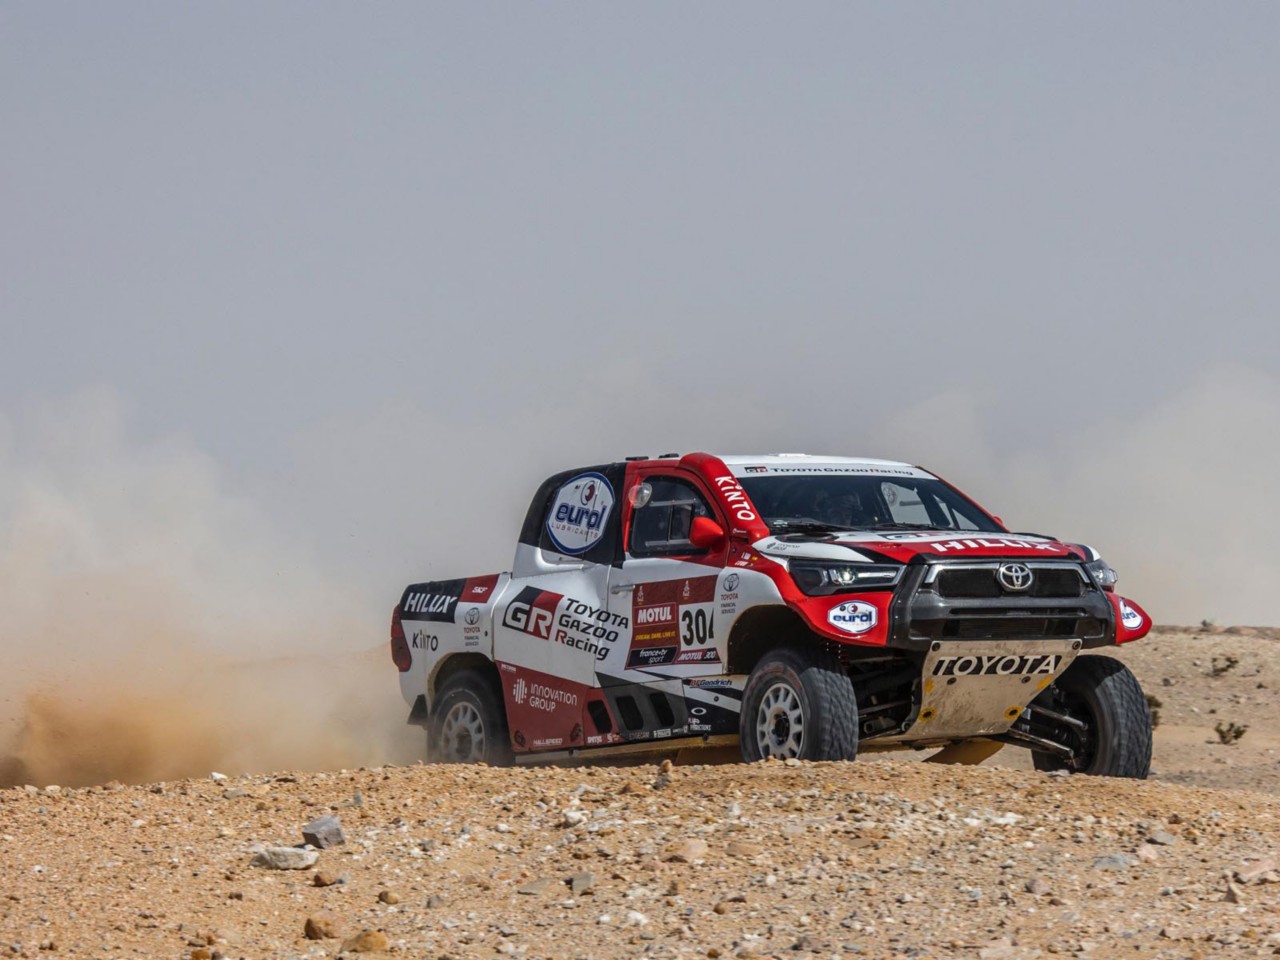 Rally car in the desert